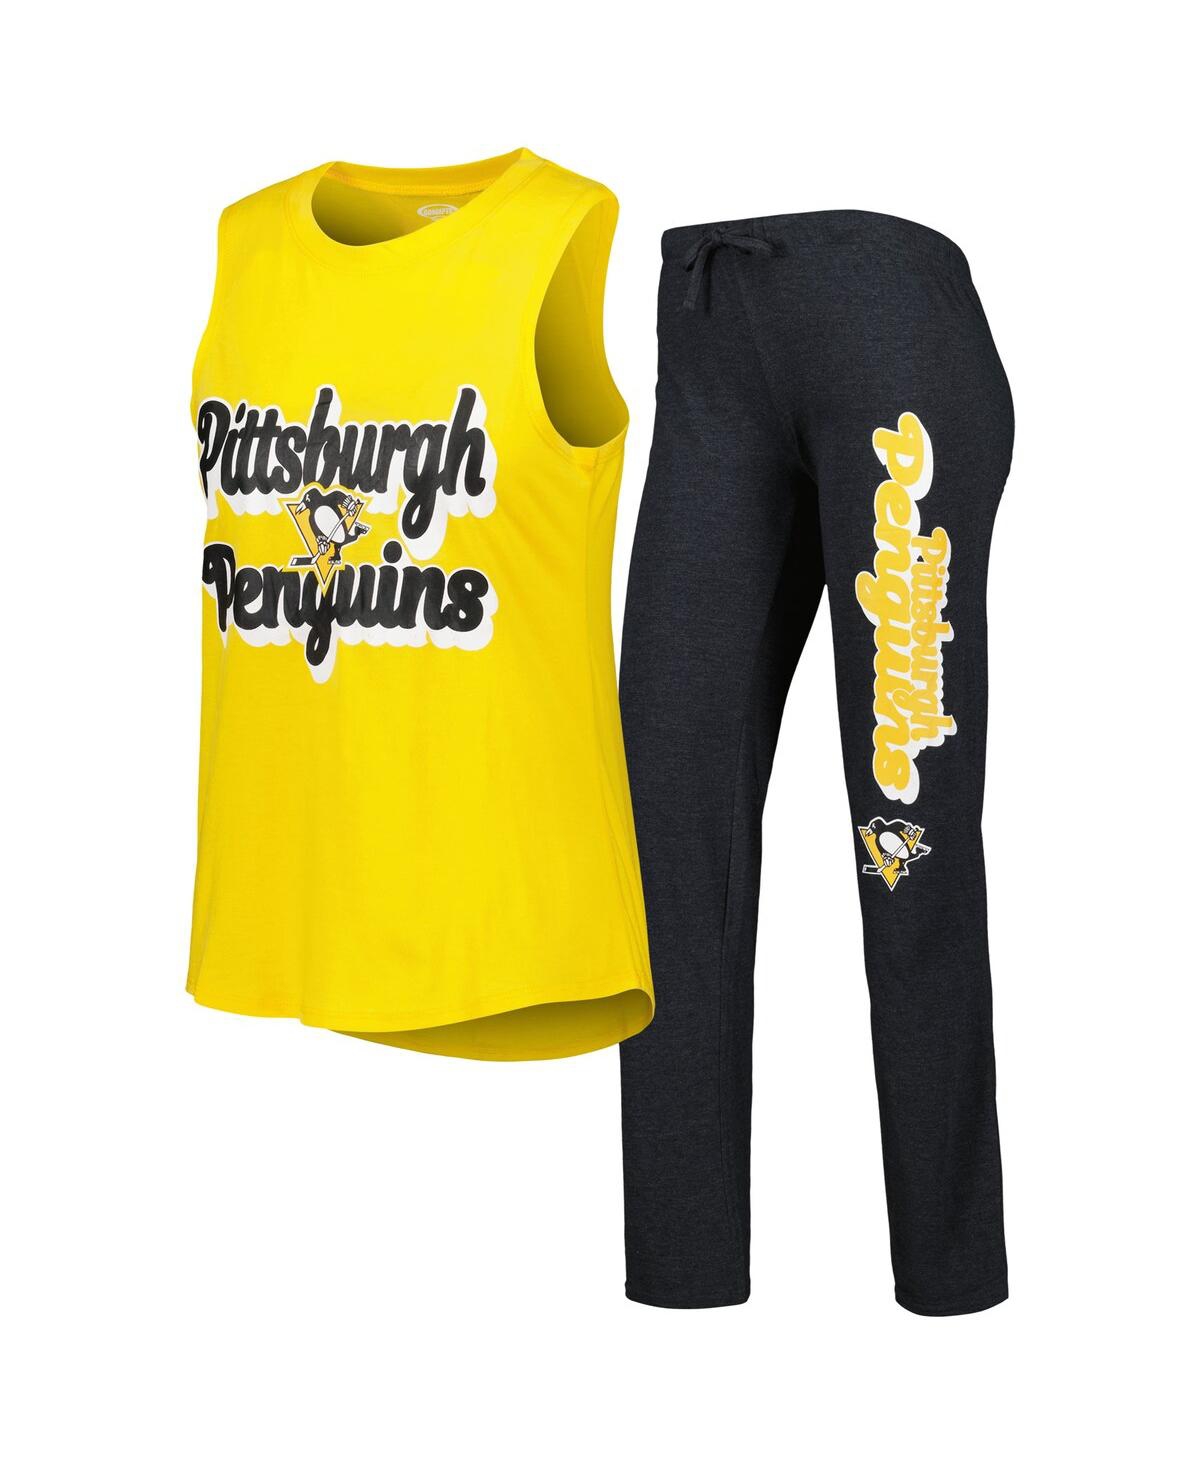 Pittsburgh Penguins Women's Jerseys - Penguins Store